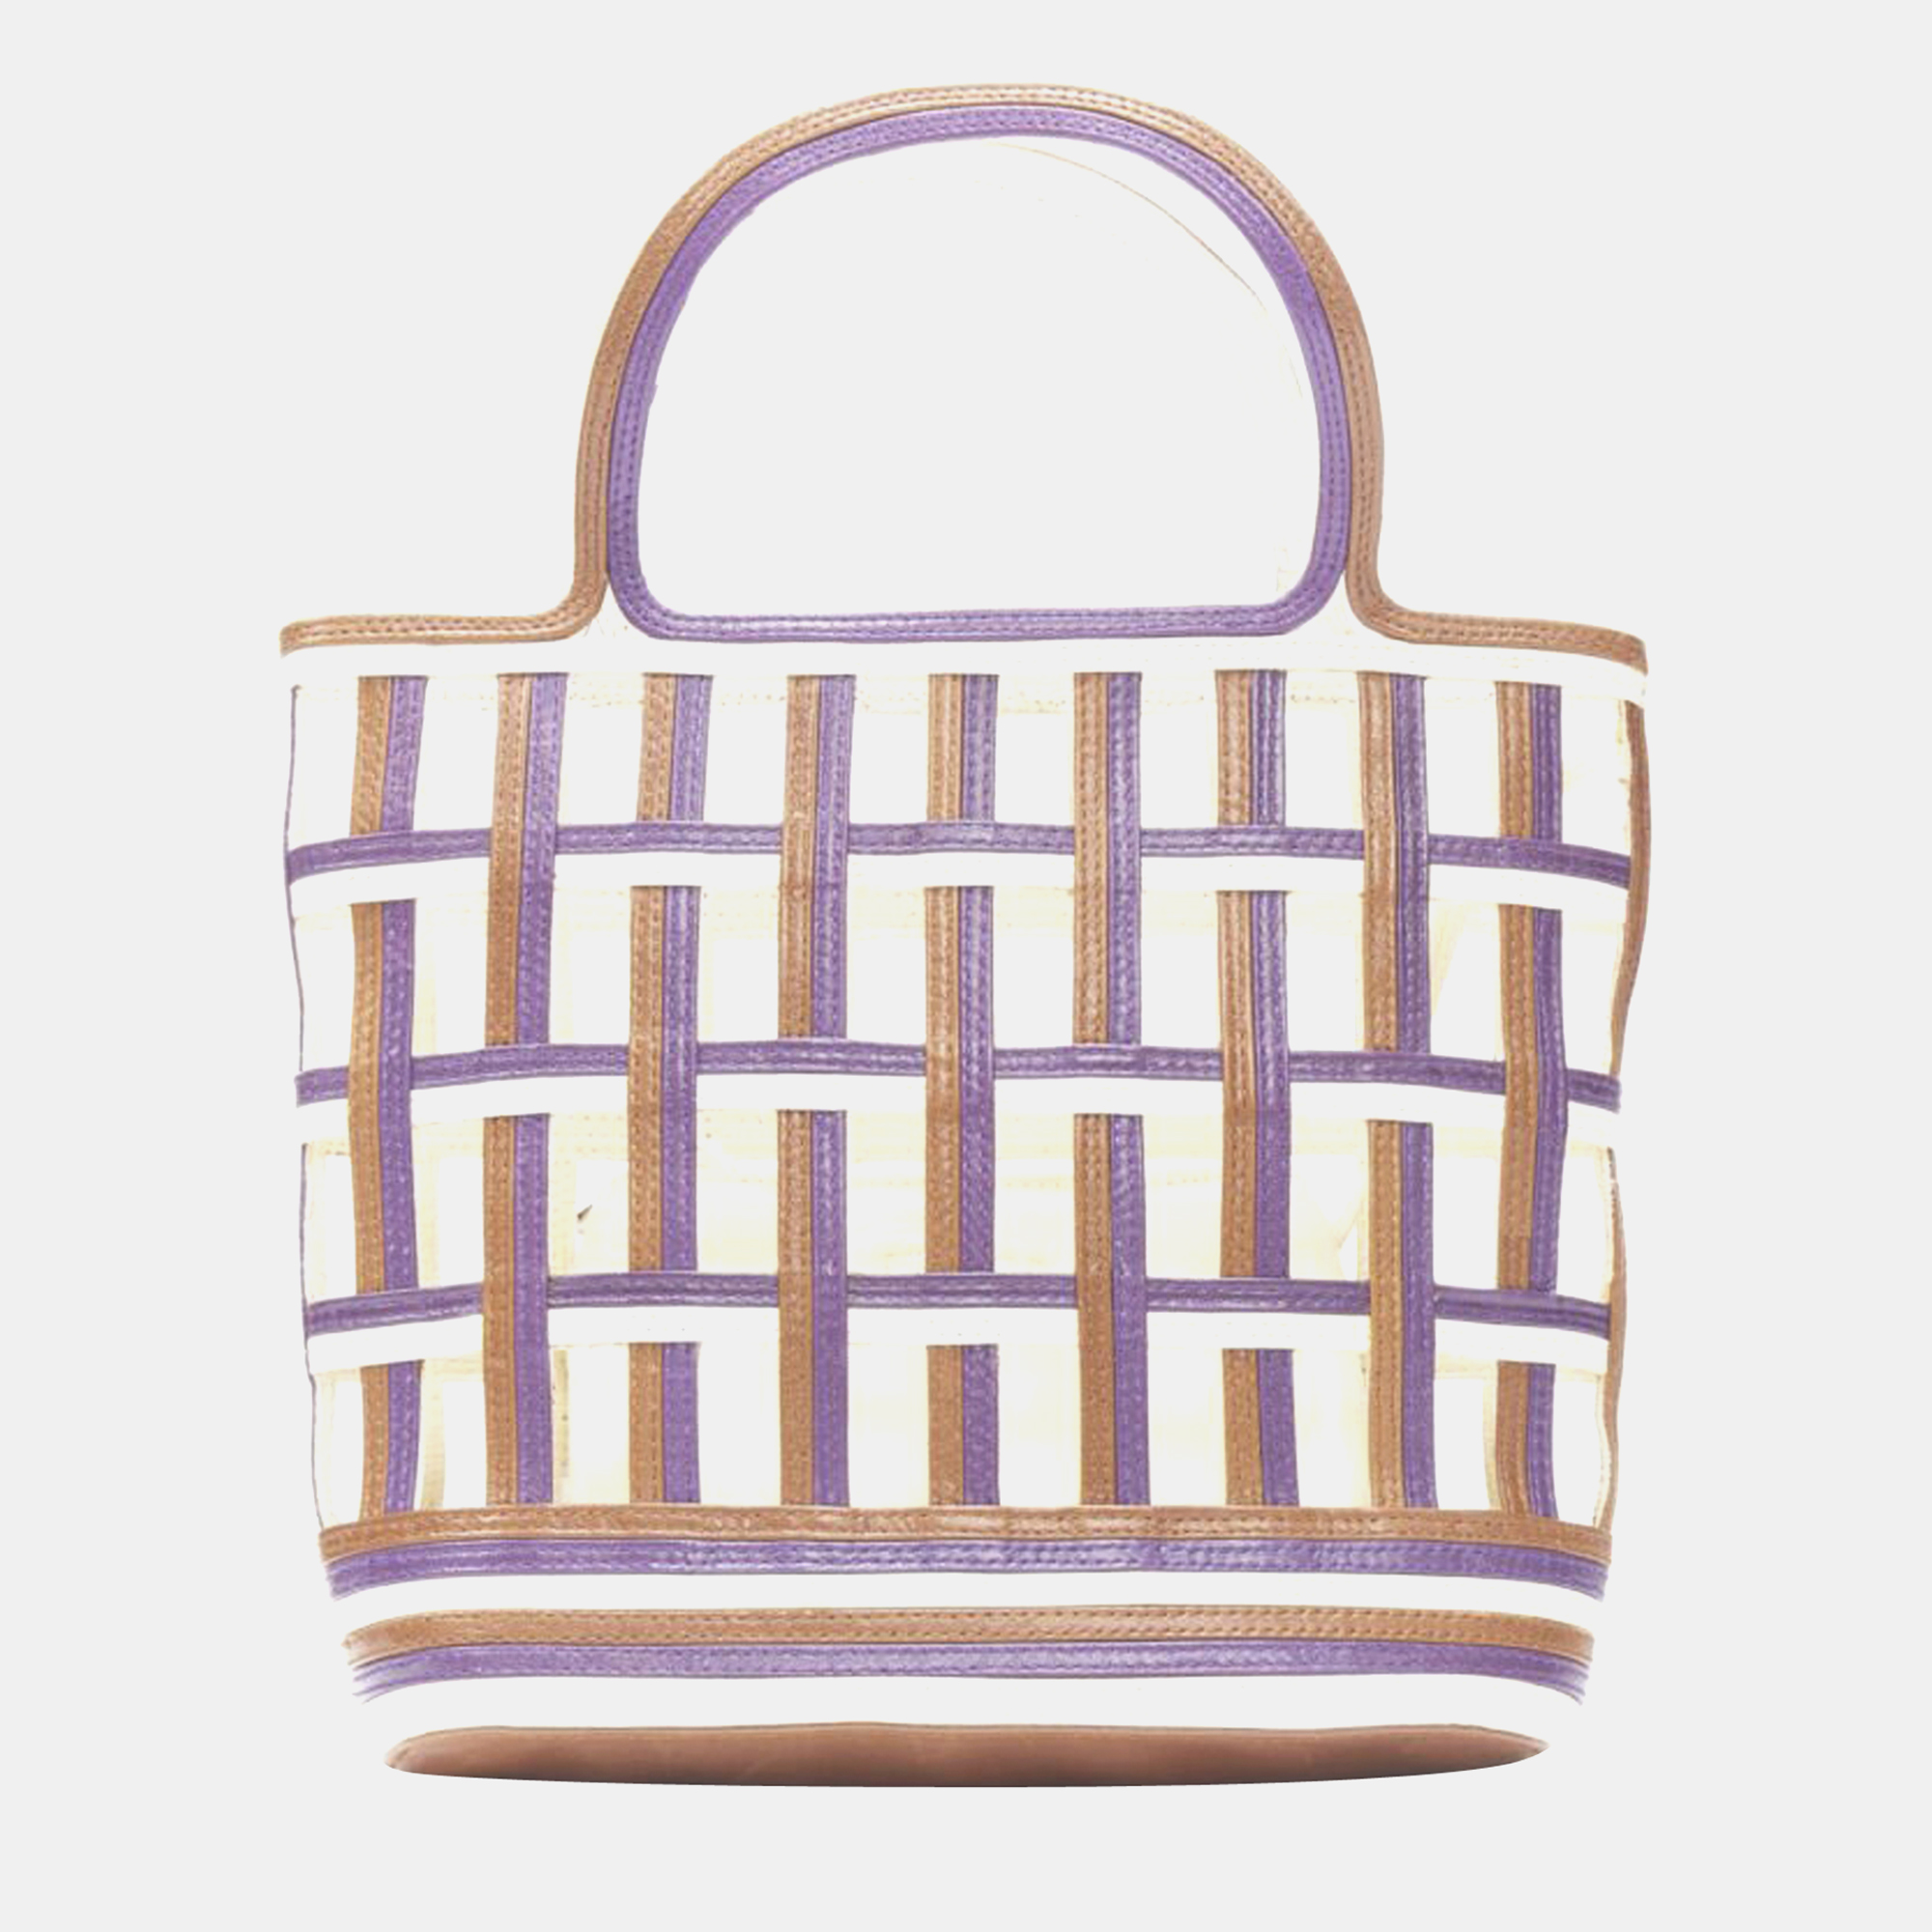 Prada purple/brown leather lattice tote bag